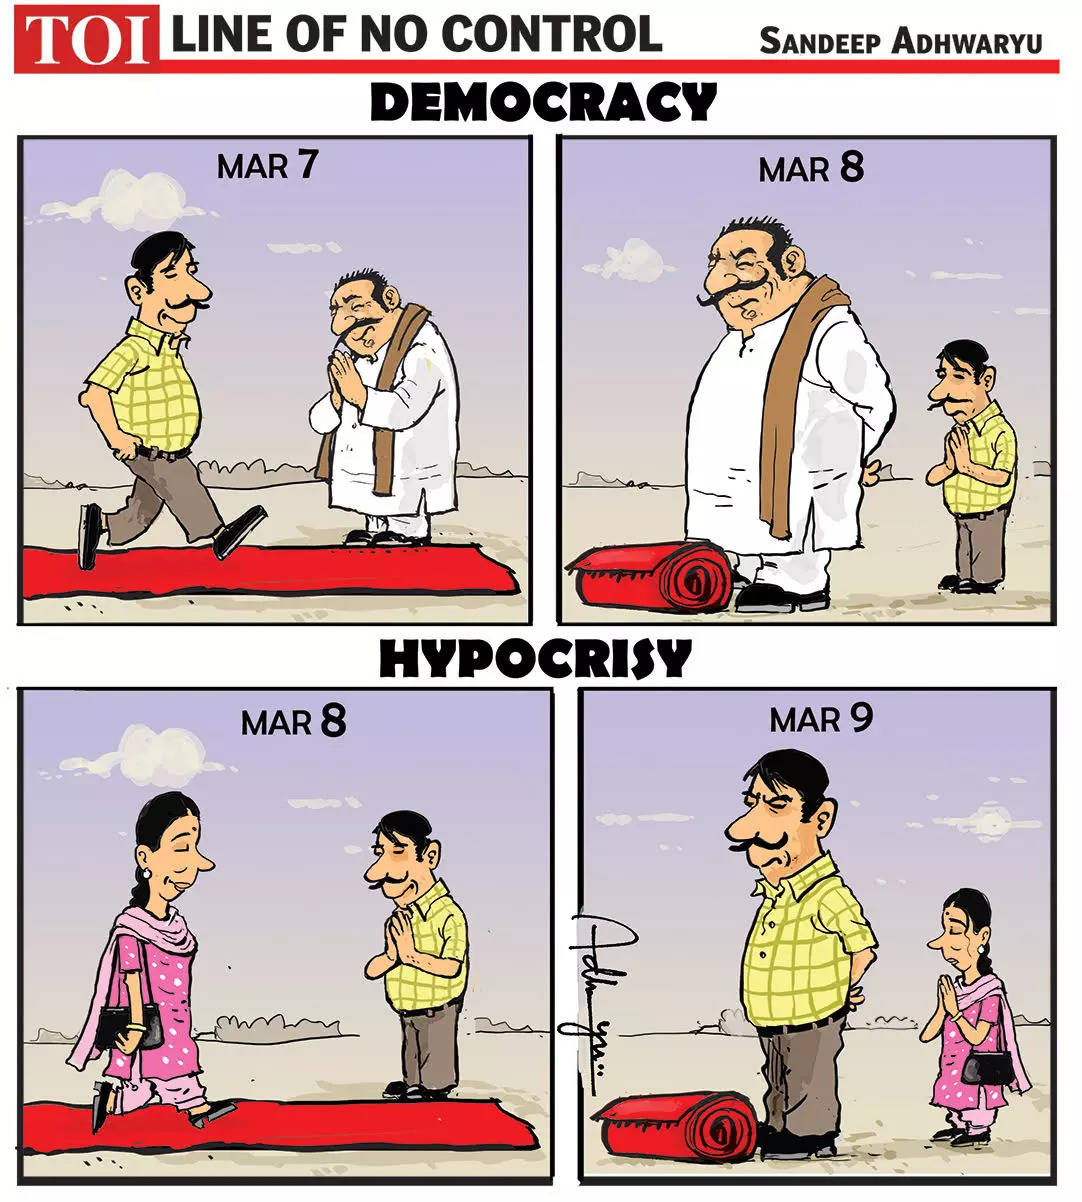 Democracy vs hypocrisy | Times of India Mobile